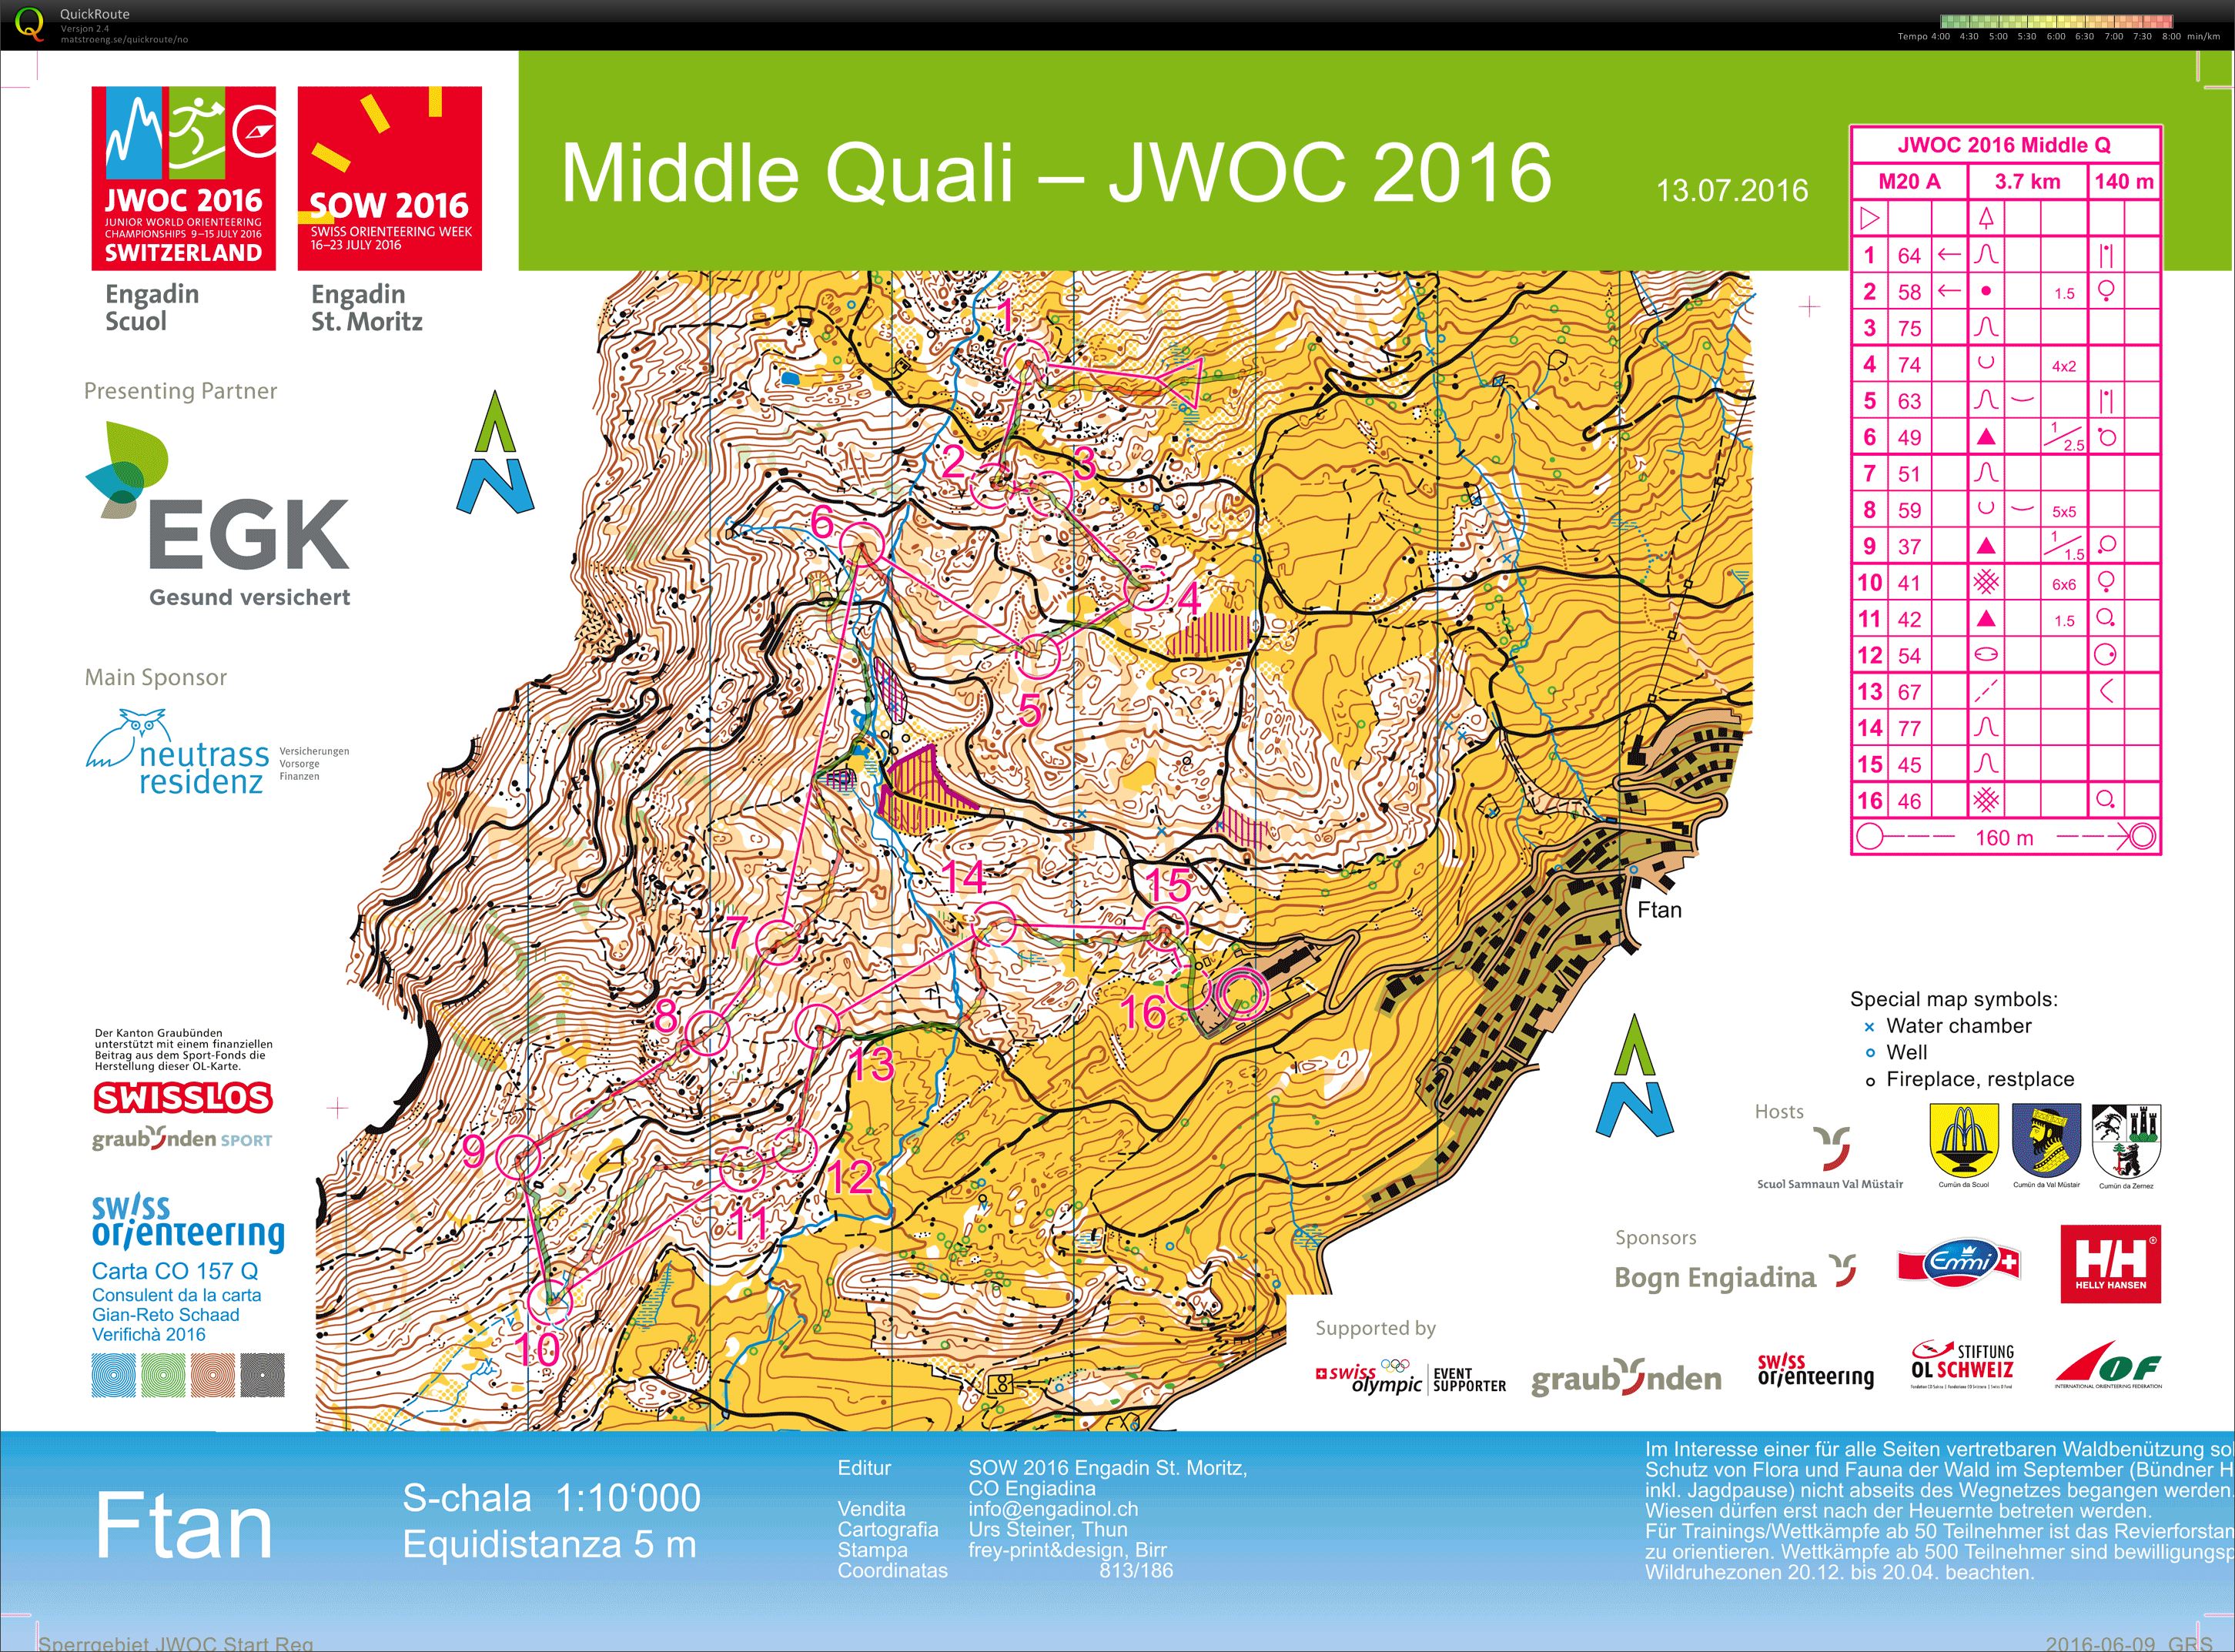 JWOC Middle Qualification (13/07/2016)